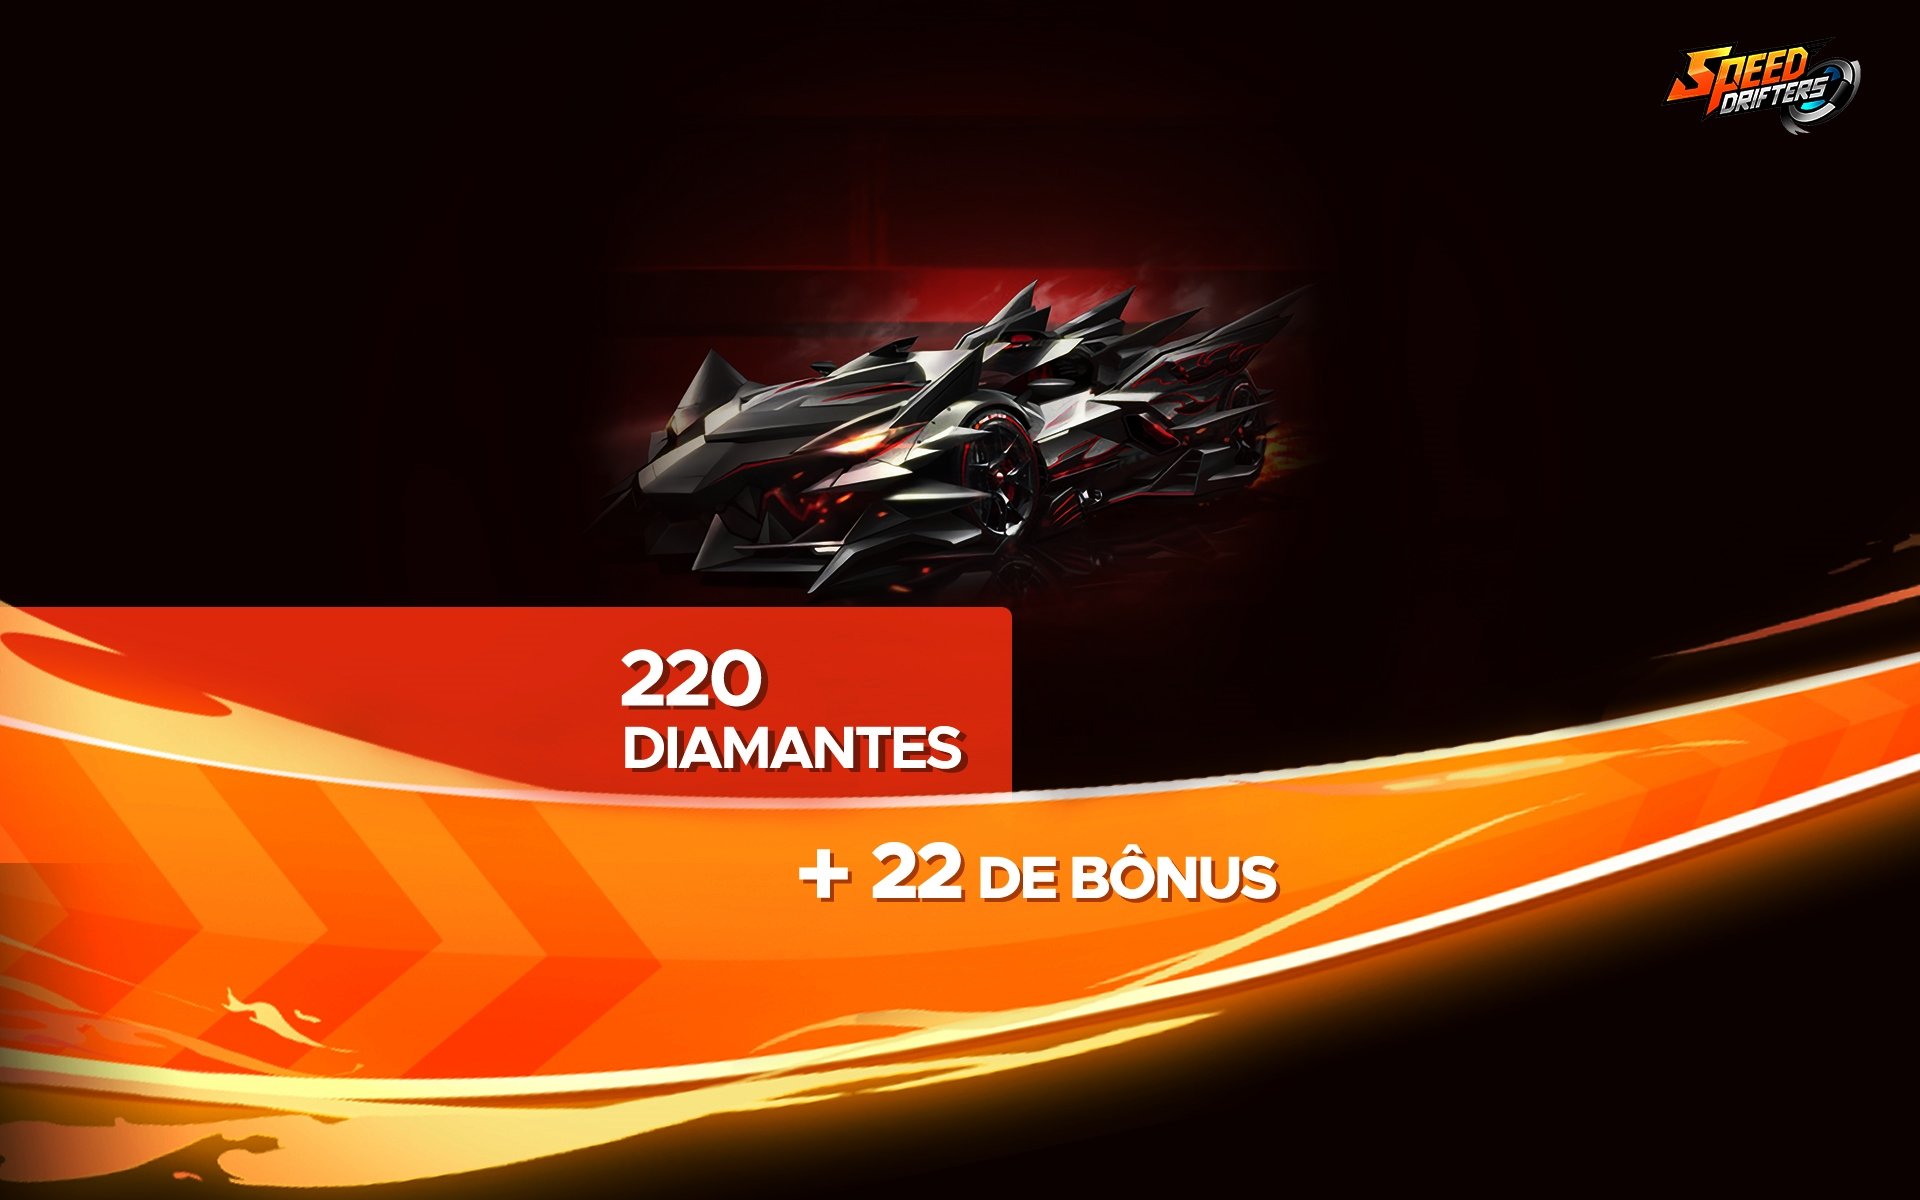 Speed Drifters - 220 Diamantes + 22 de Bônus